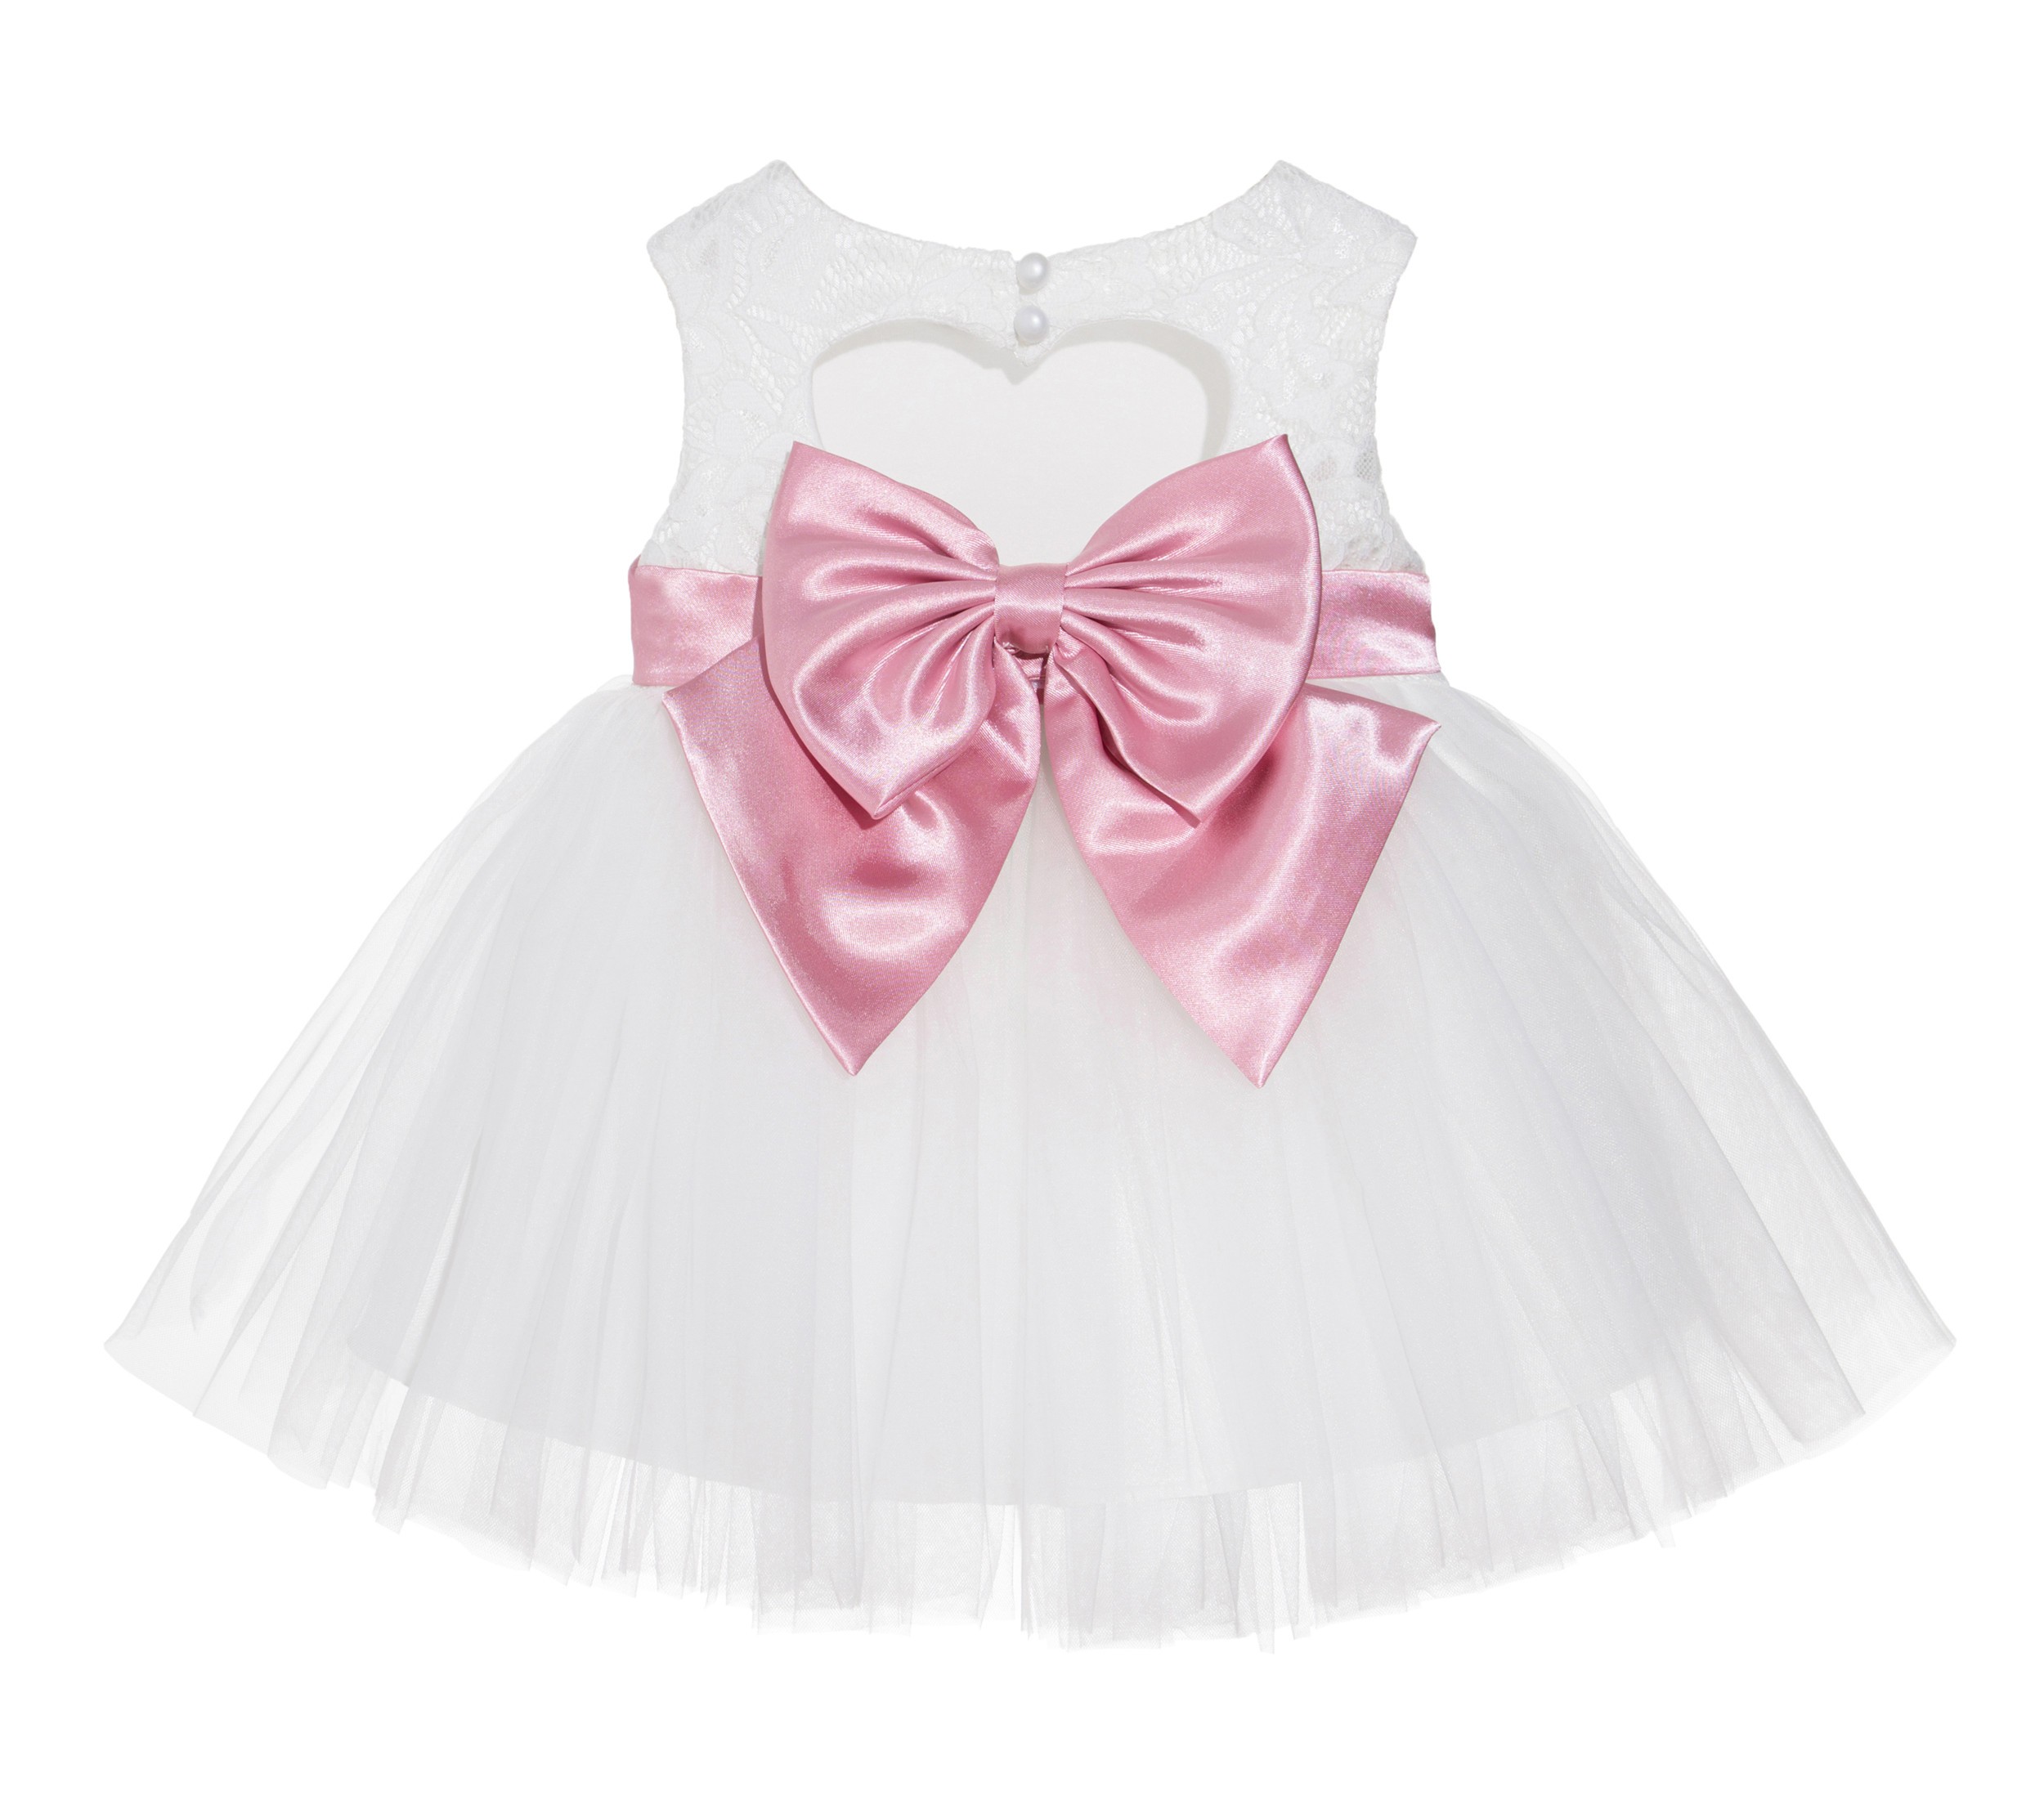 Ivory / Dusty Rose Lace Heart Cutout Flower Girl Dress Baby Dress BB1